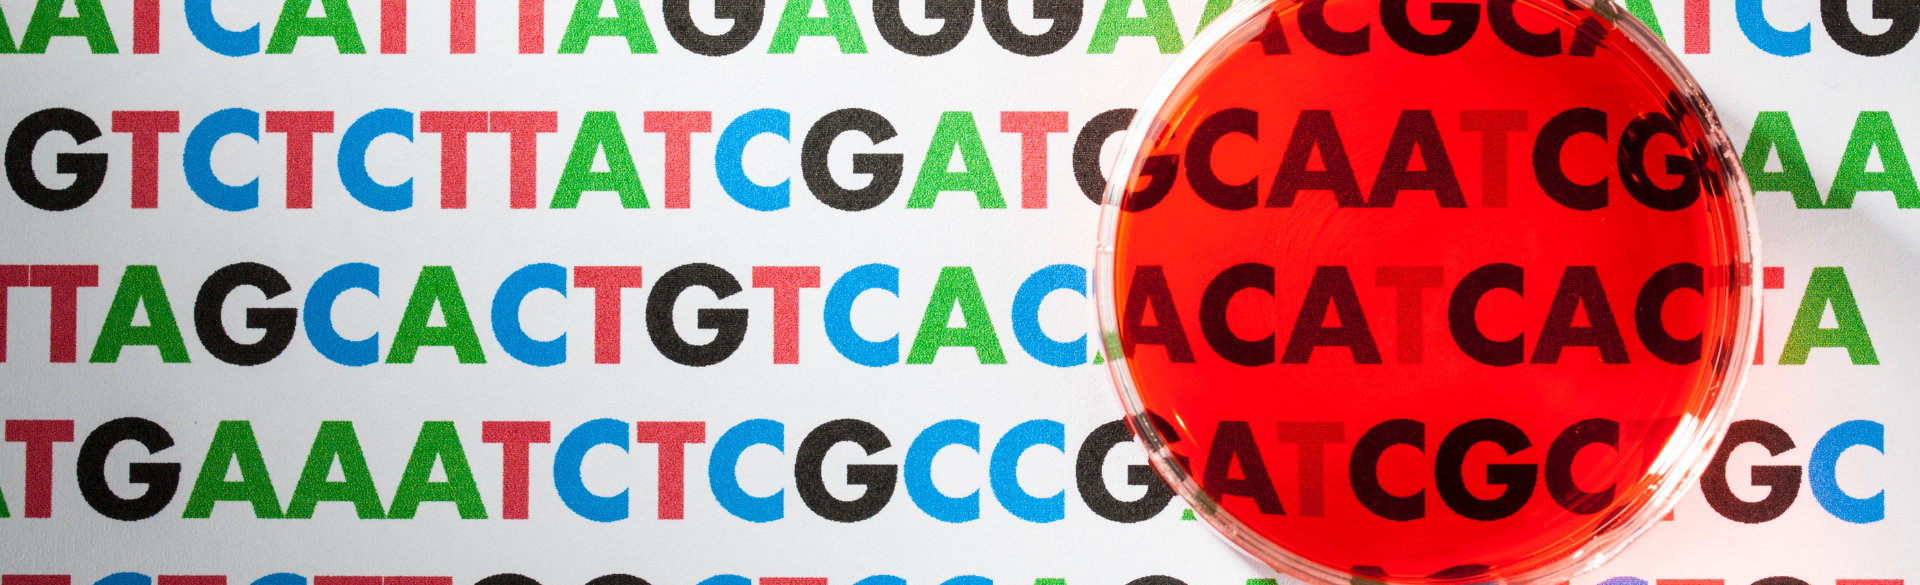 What is genomics